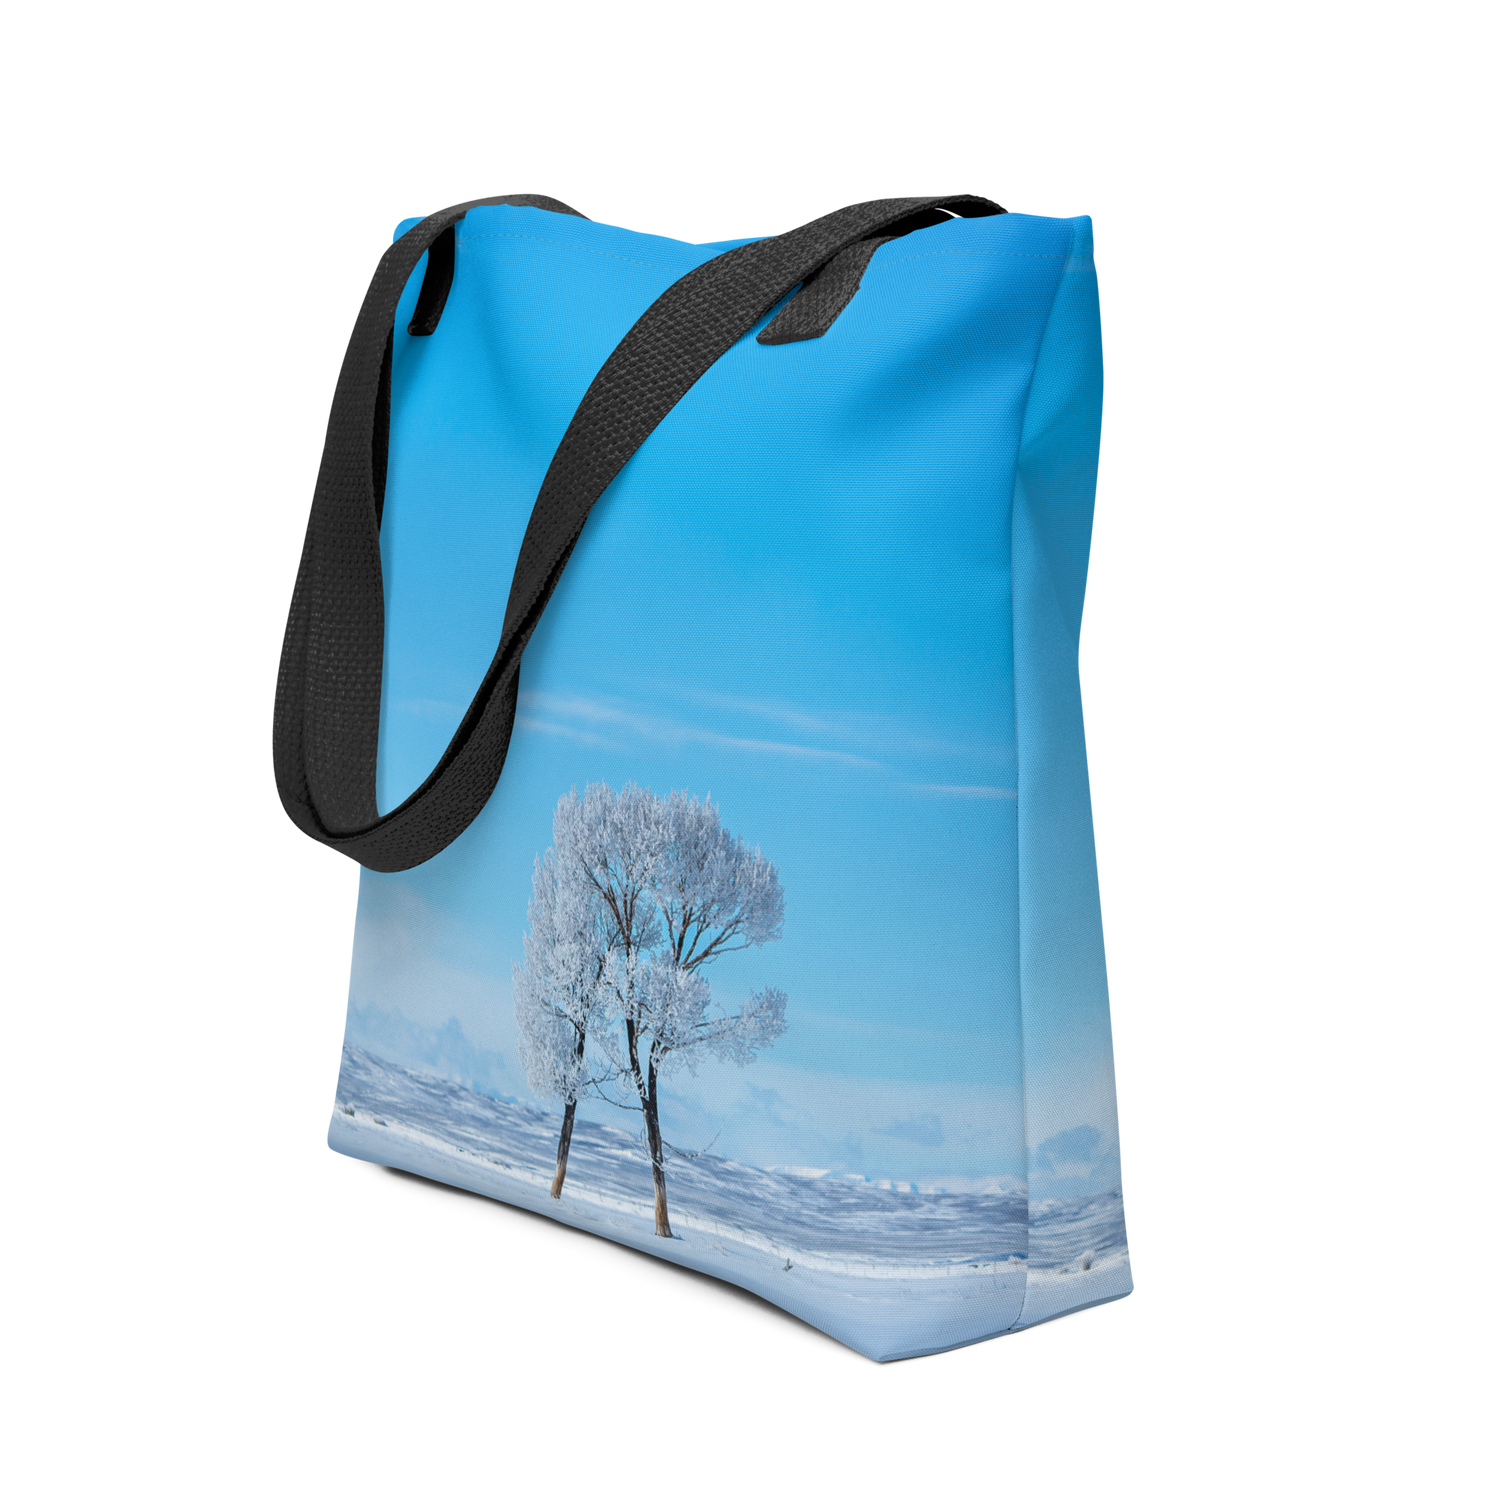 Winter Wonderland Tote bag